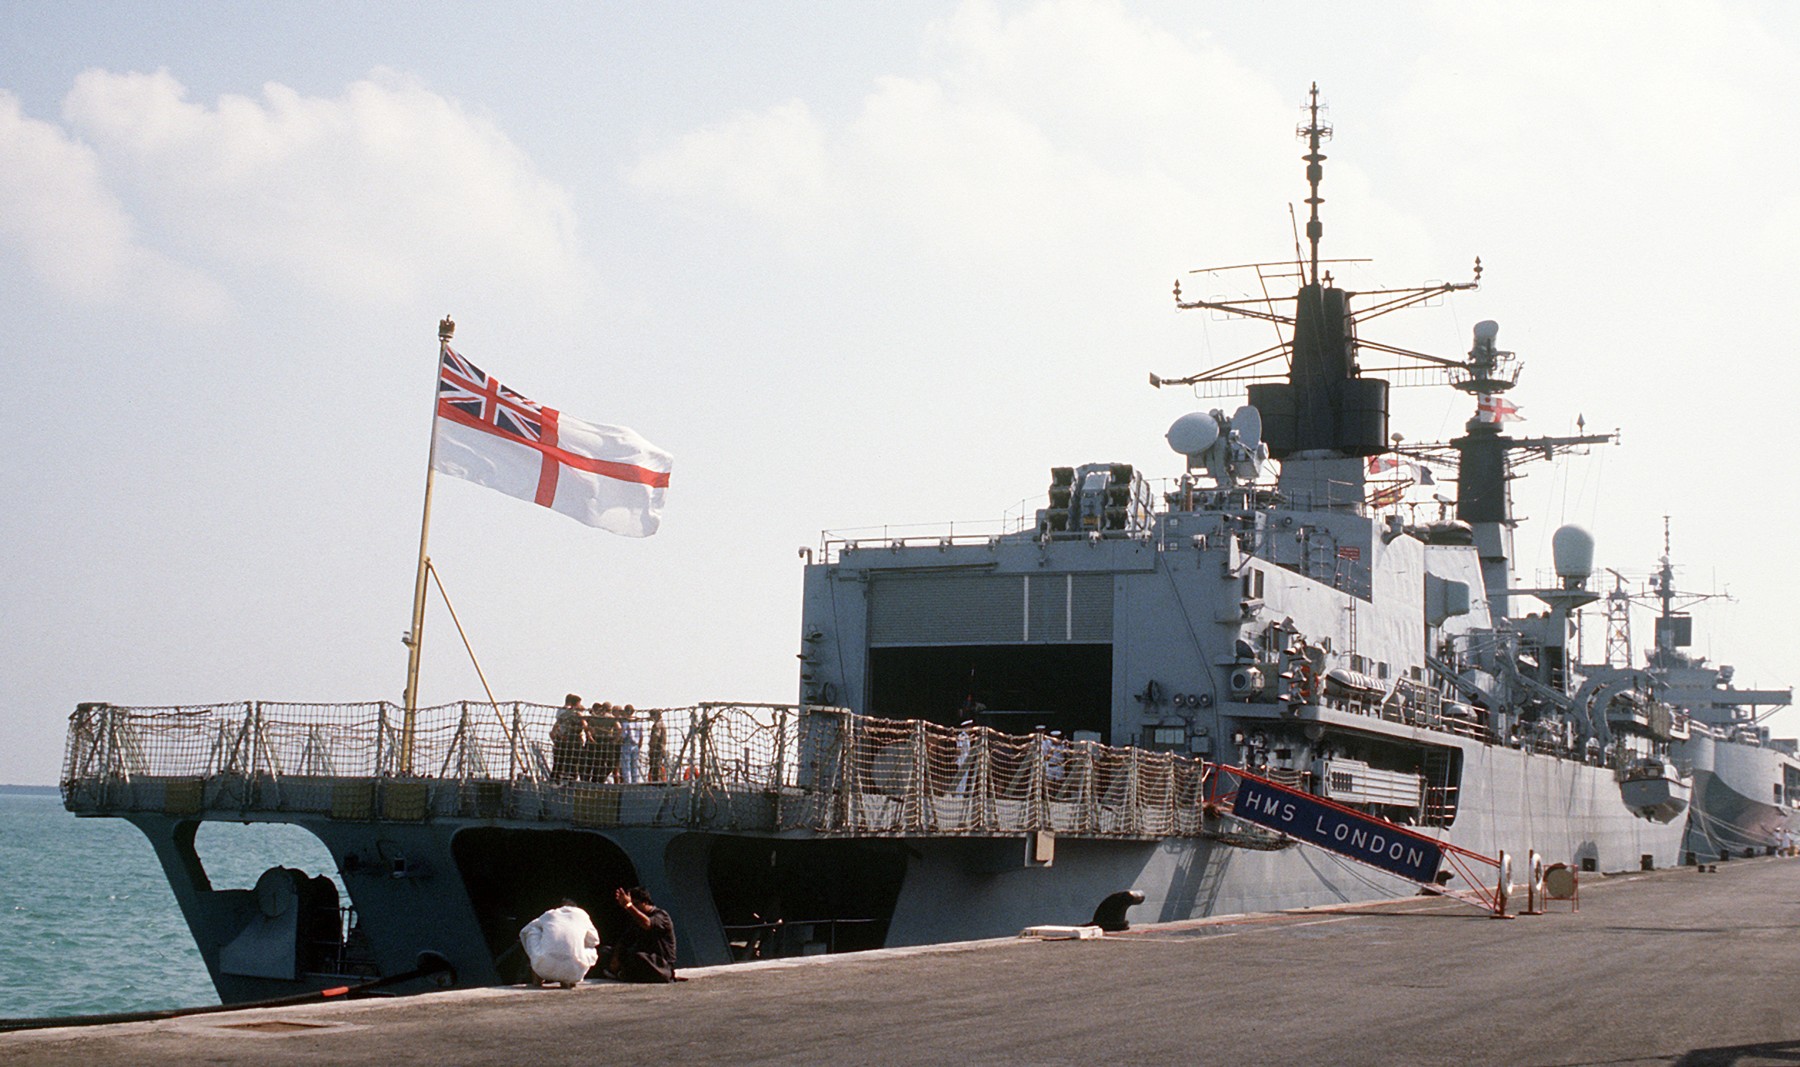 f-95 hms london type 22 broadsword class frigate royal navy 02x